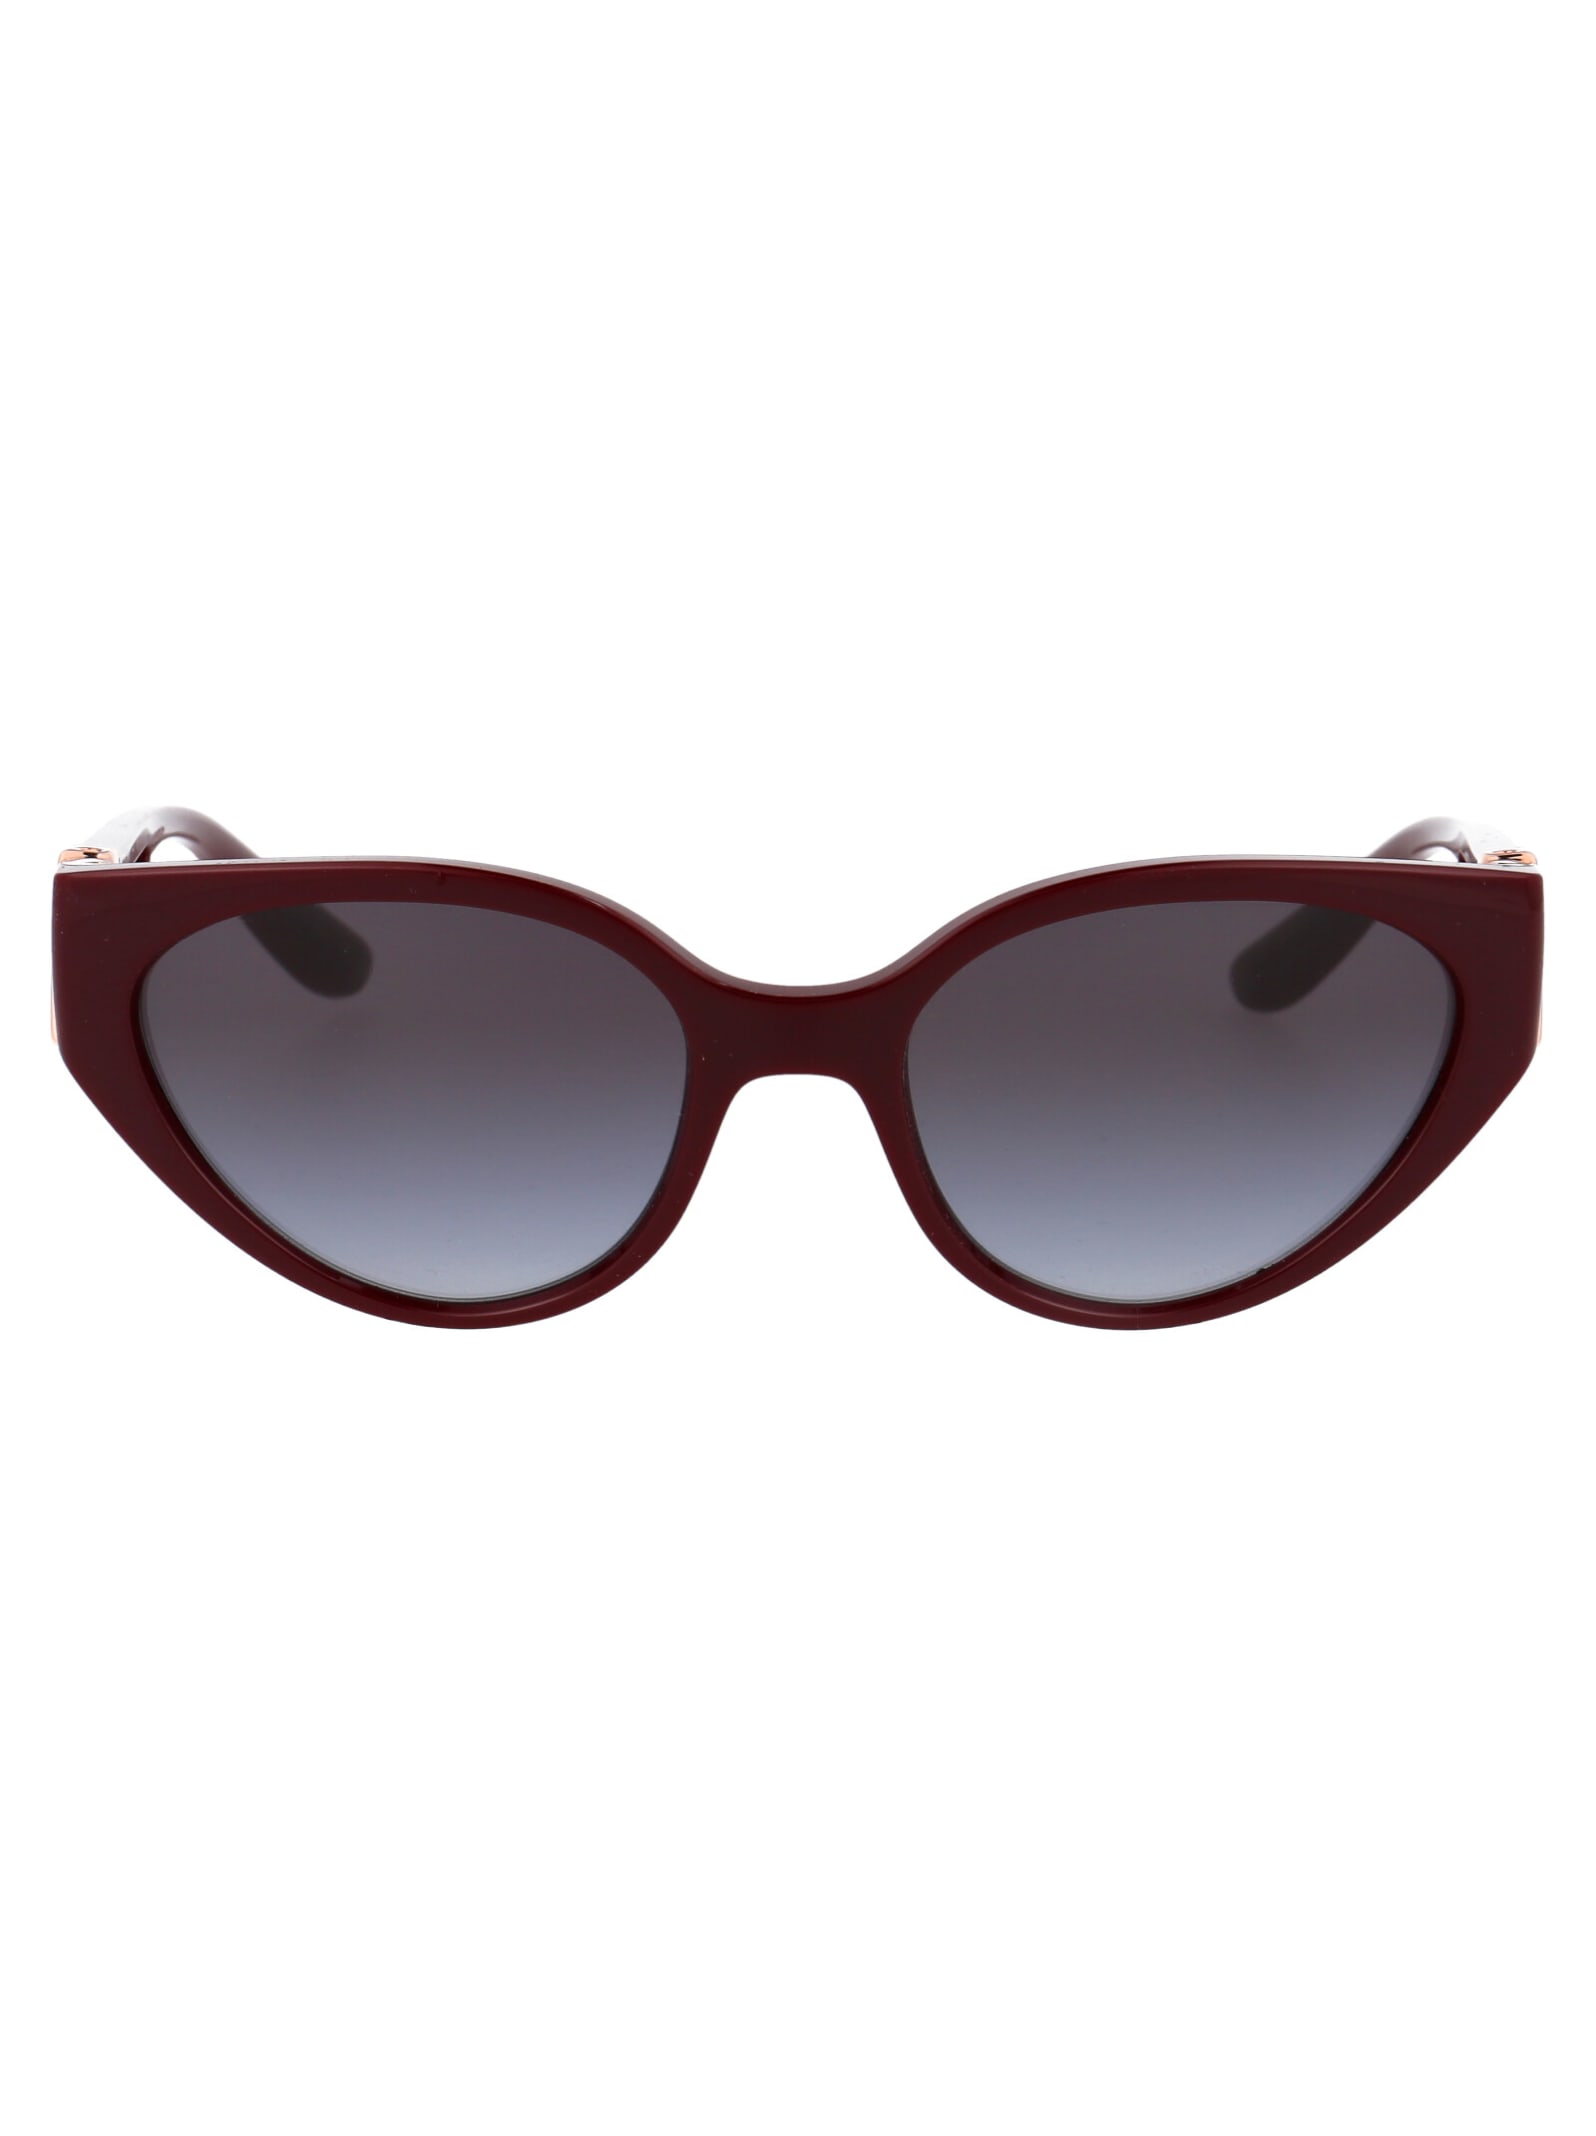 Dolce & Gabbana Eyewear 0dg6146 Sunglasses